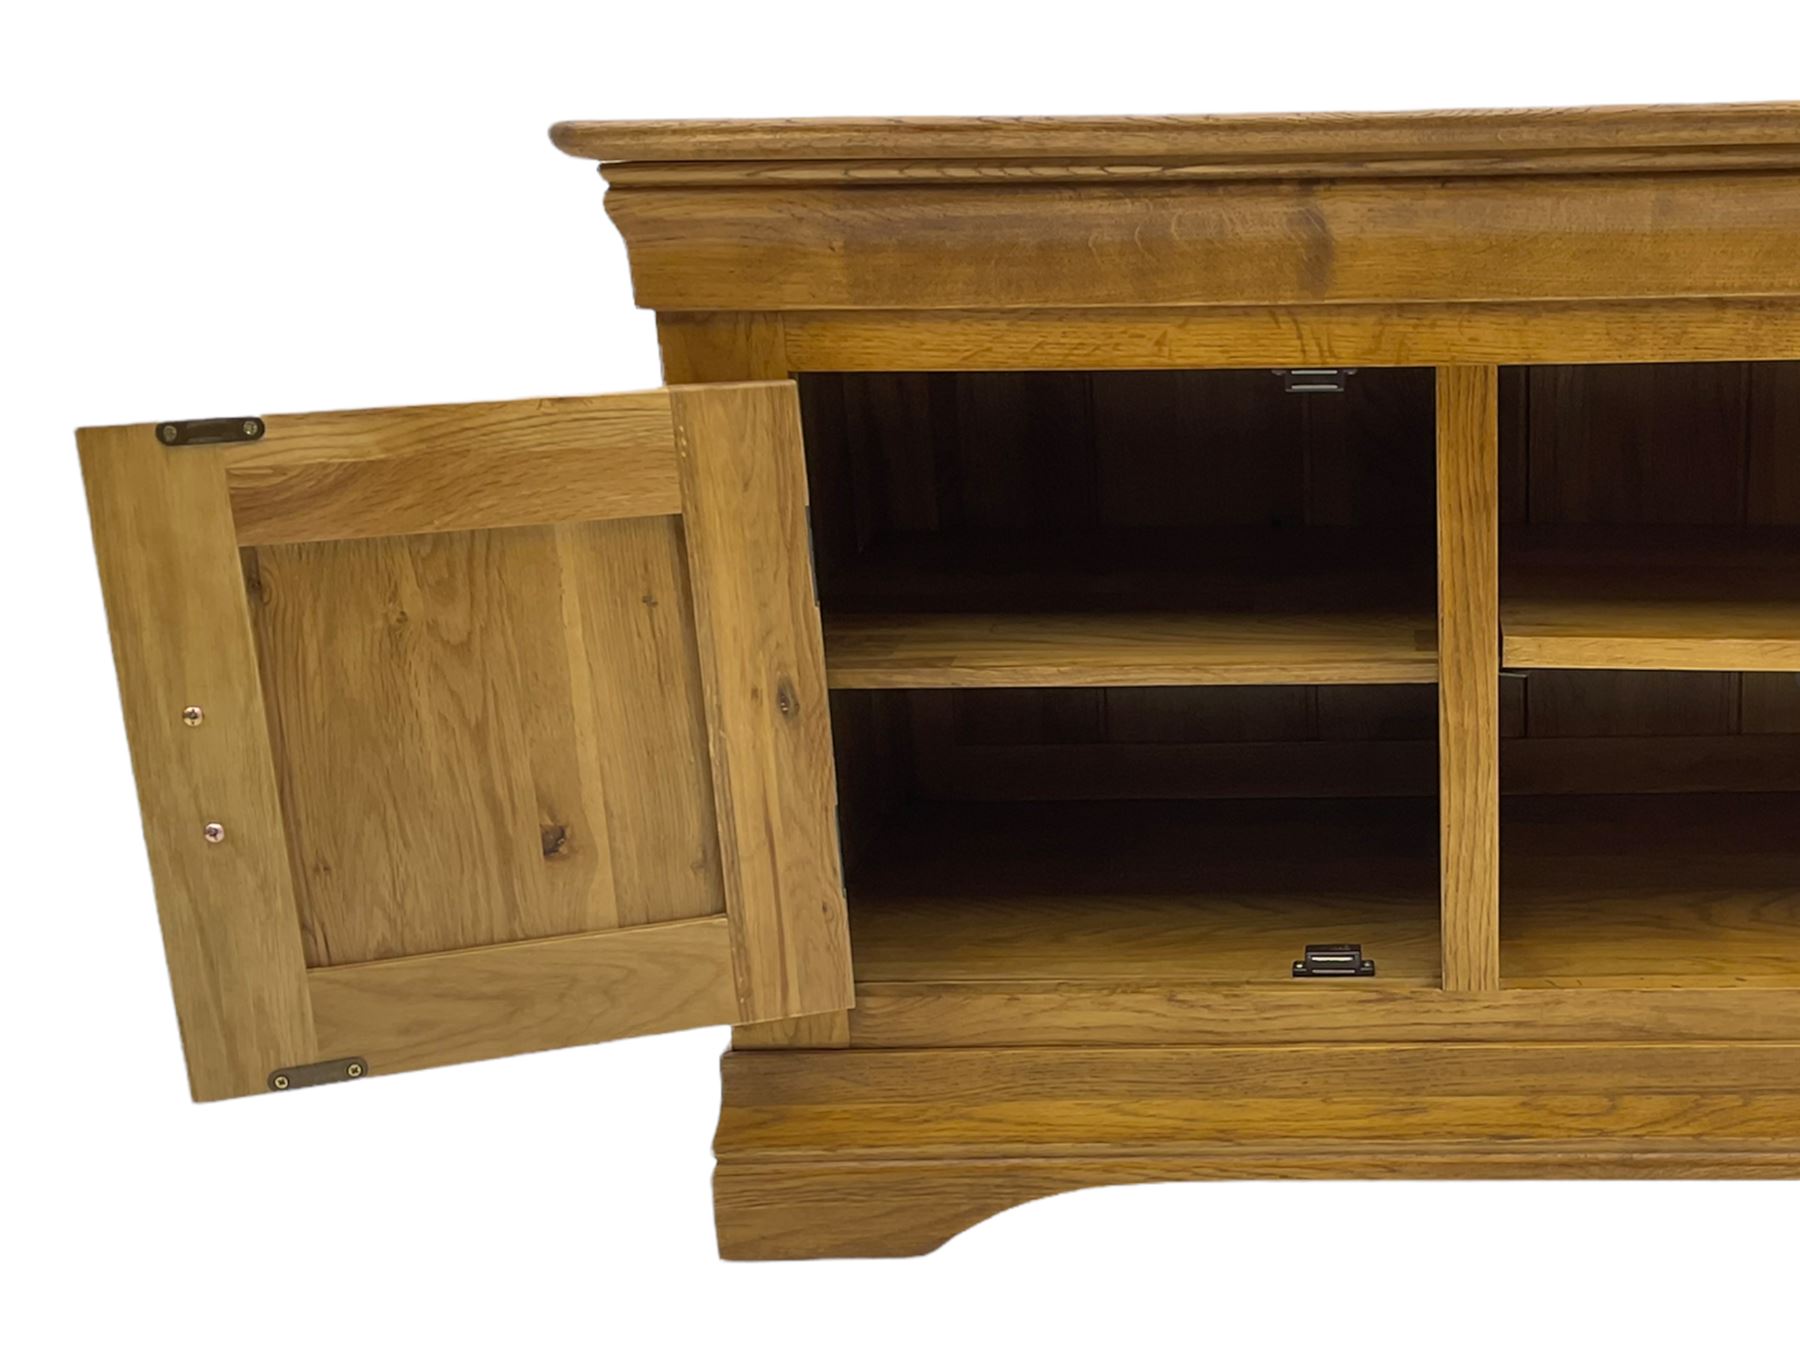 Light oak side cabinet/television stand - Image 4 of 4